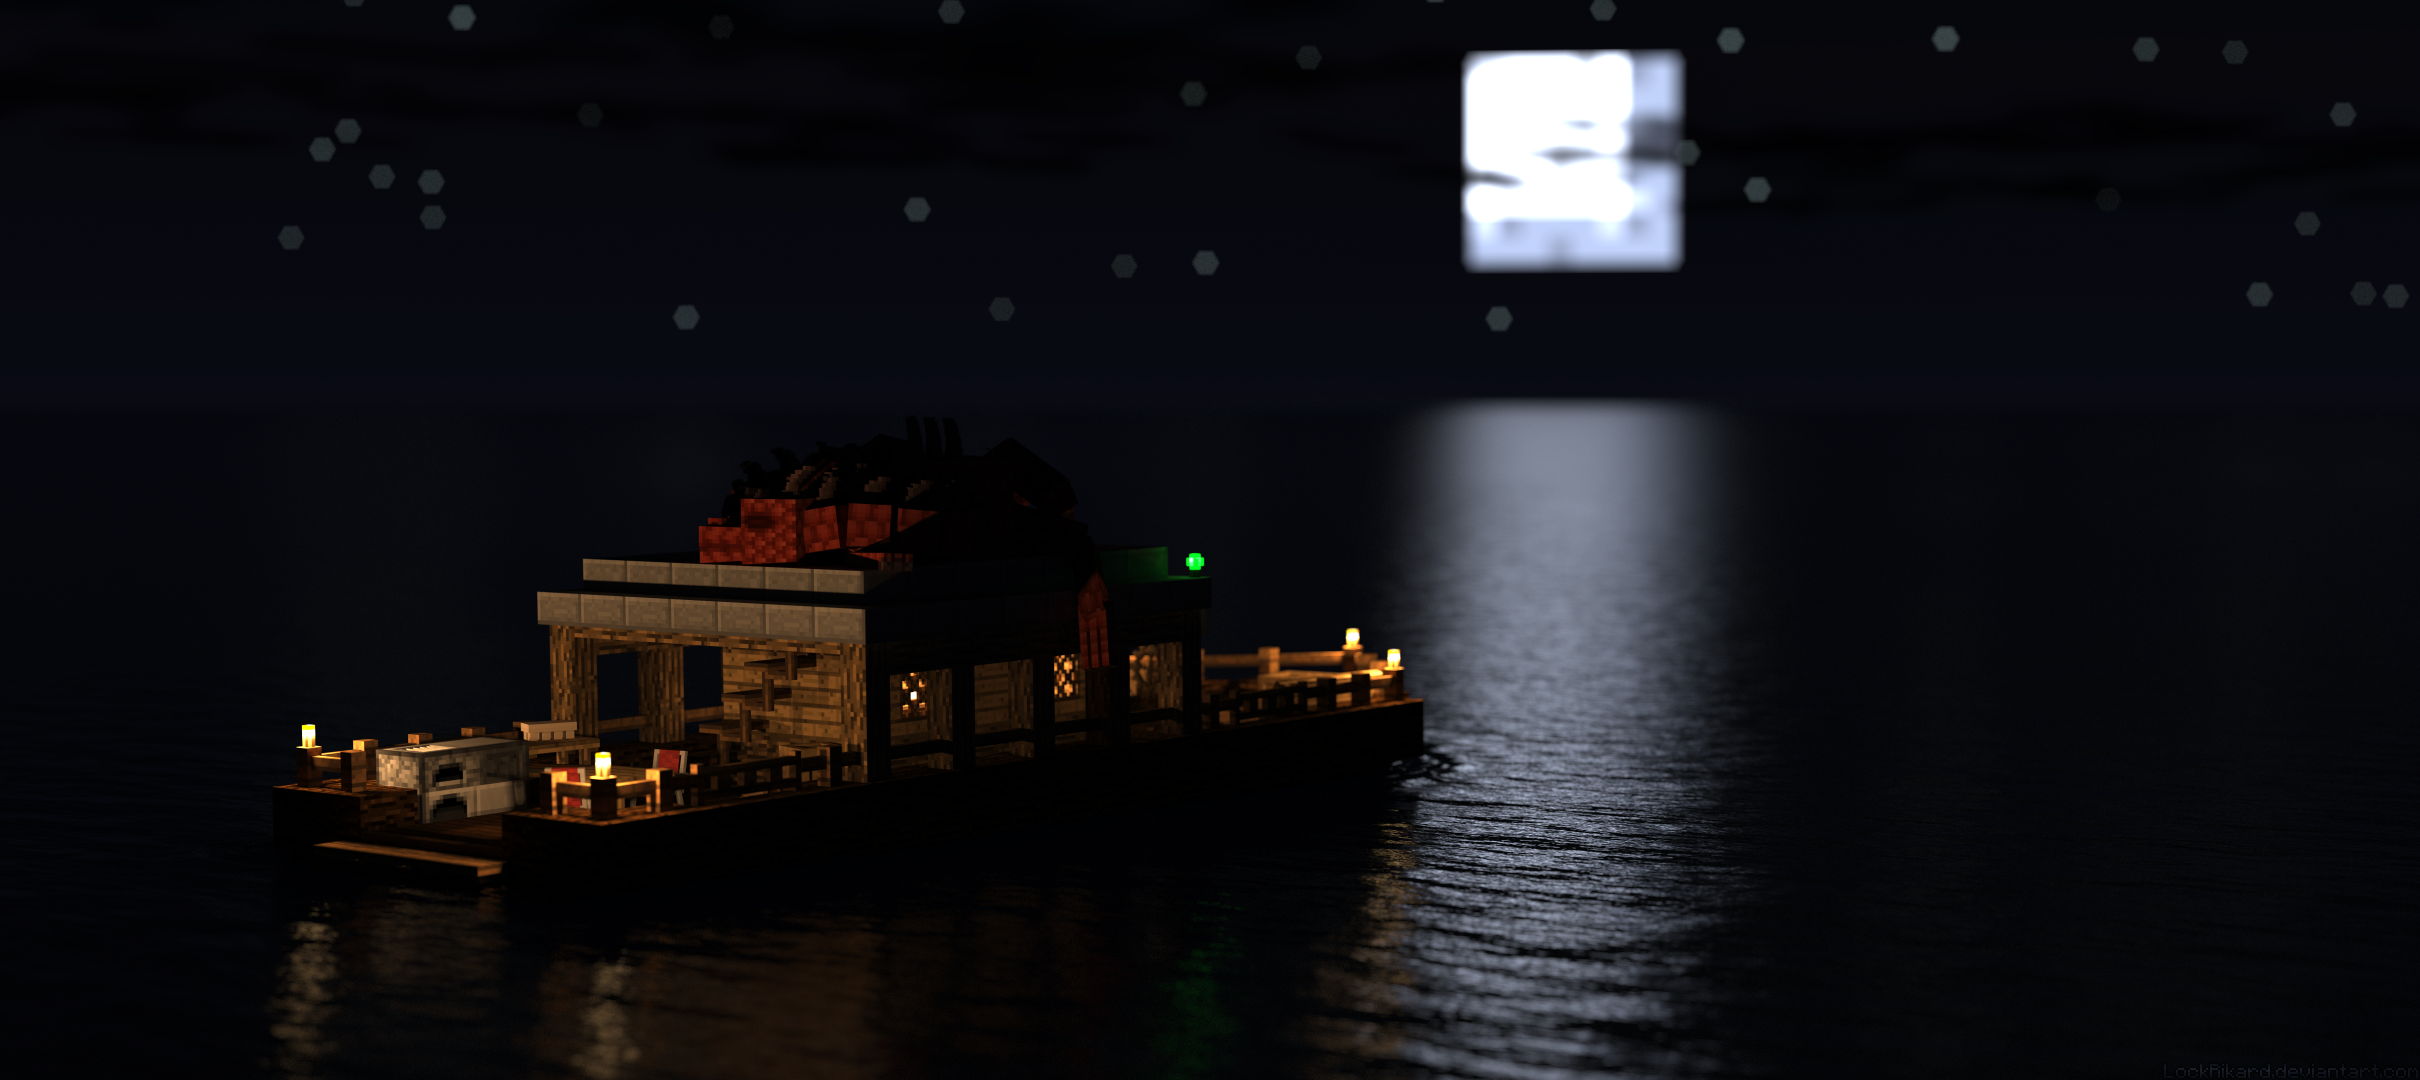 http://fc03.deviantart.net/fs70/f/2014/029/9/a/boating_at_night_by_lockrikard-d748yaf.png